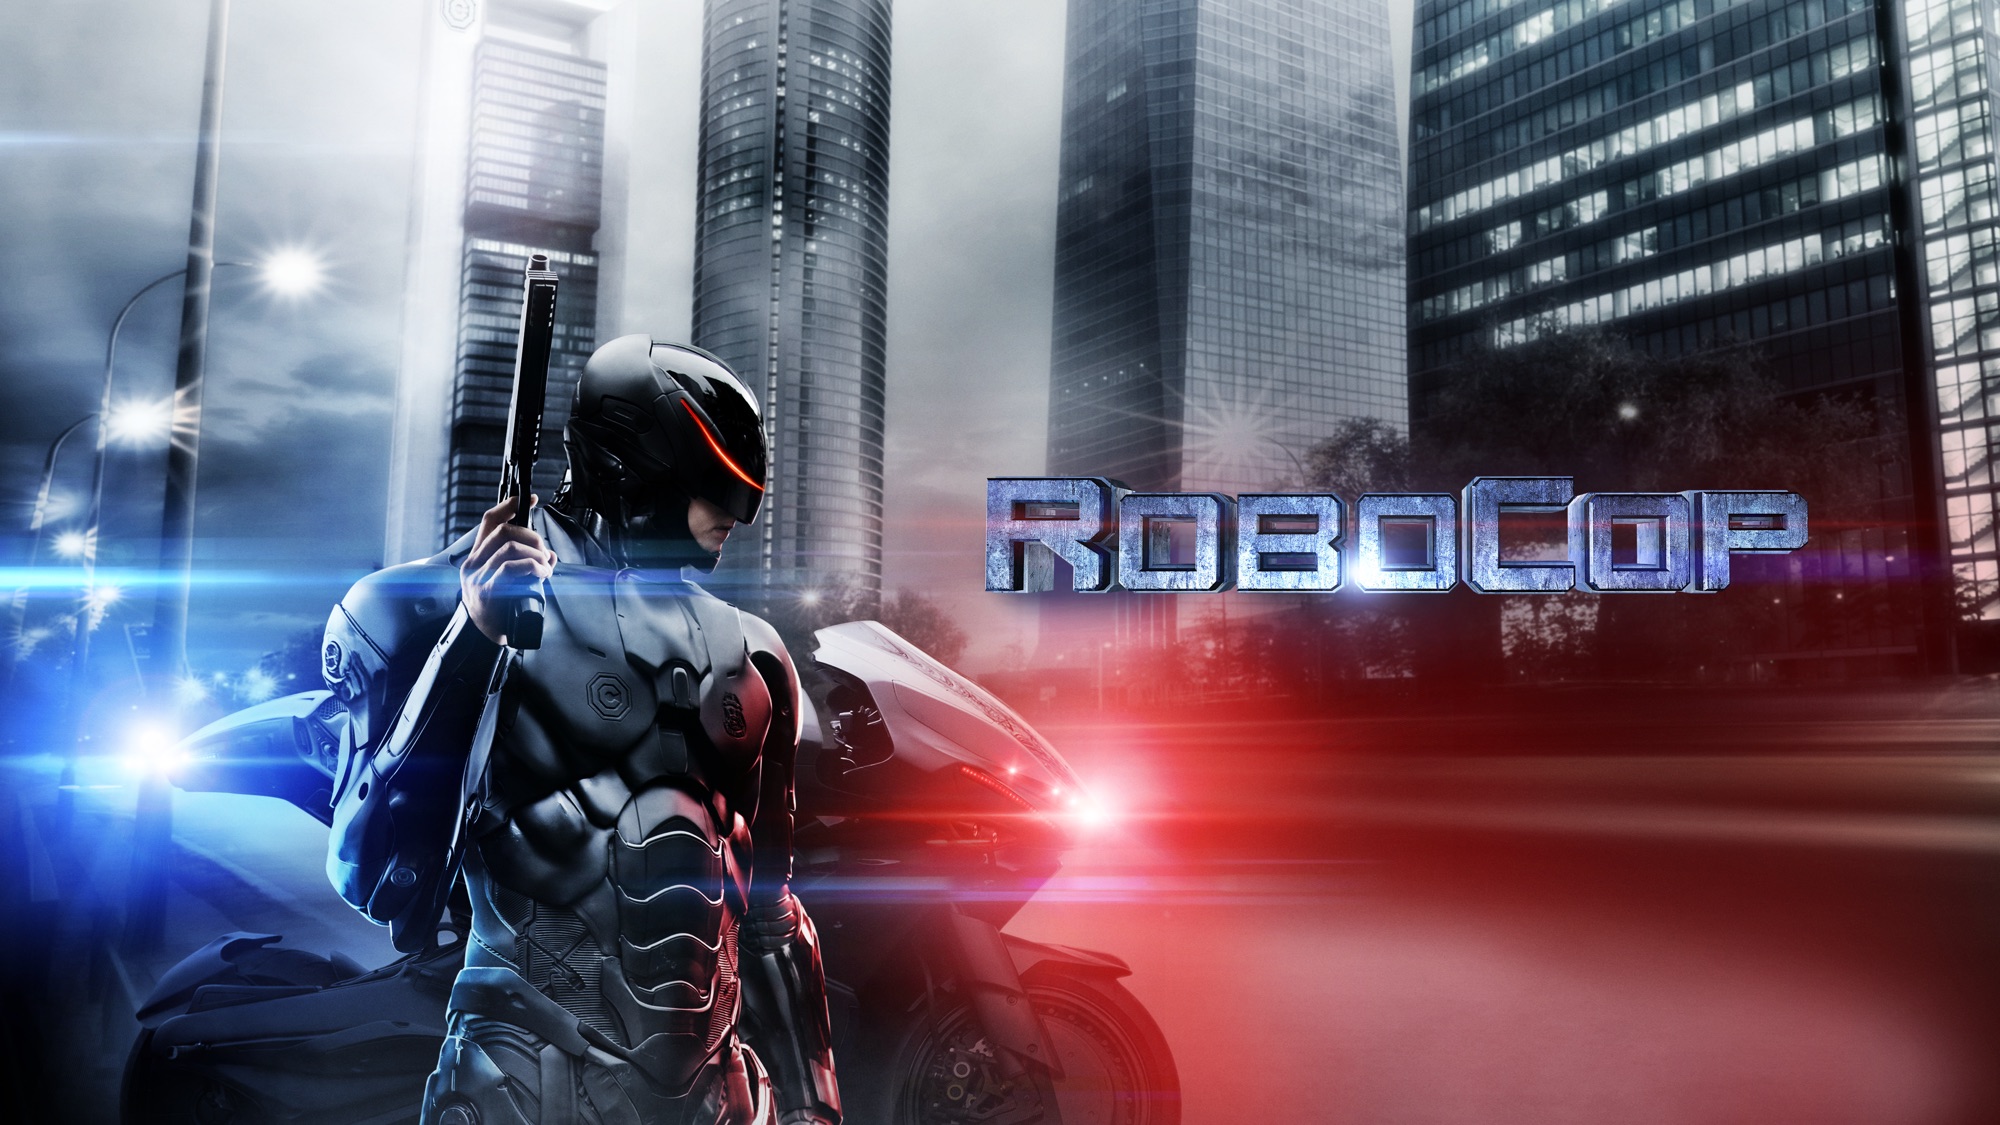 495116 Bild herunterladen filme, robo cop (2014), robocop - Hintergrundbilder und Bildschirmschoner kostenlos